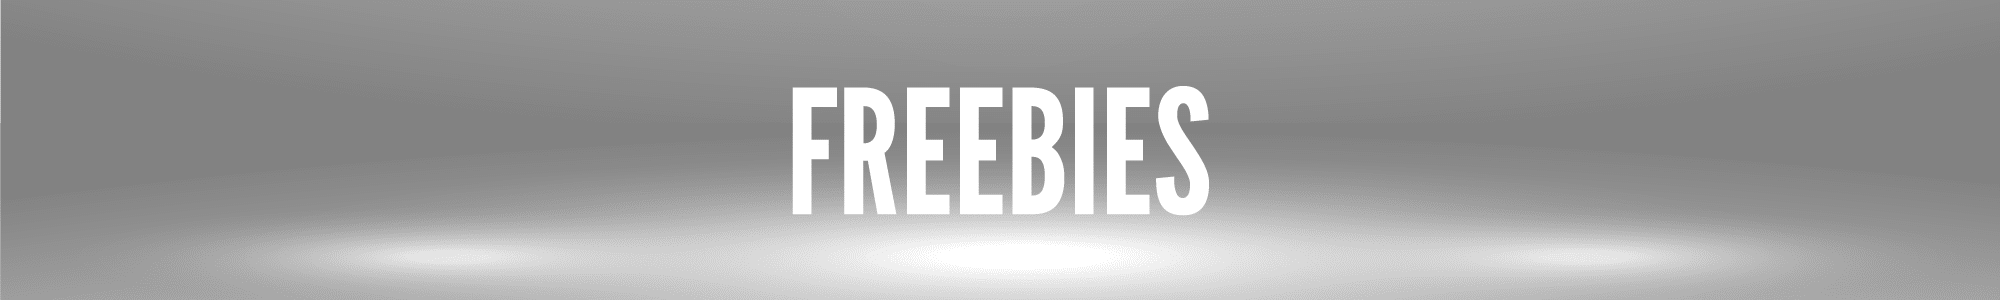 Freebies banner image